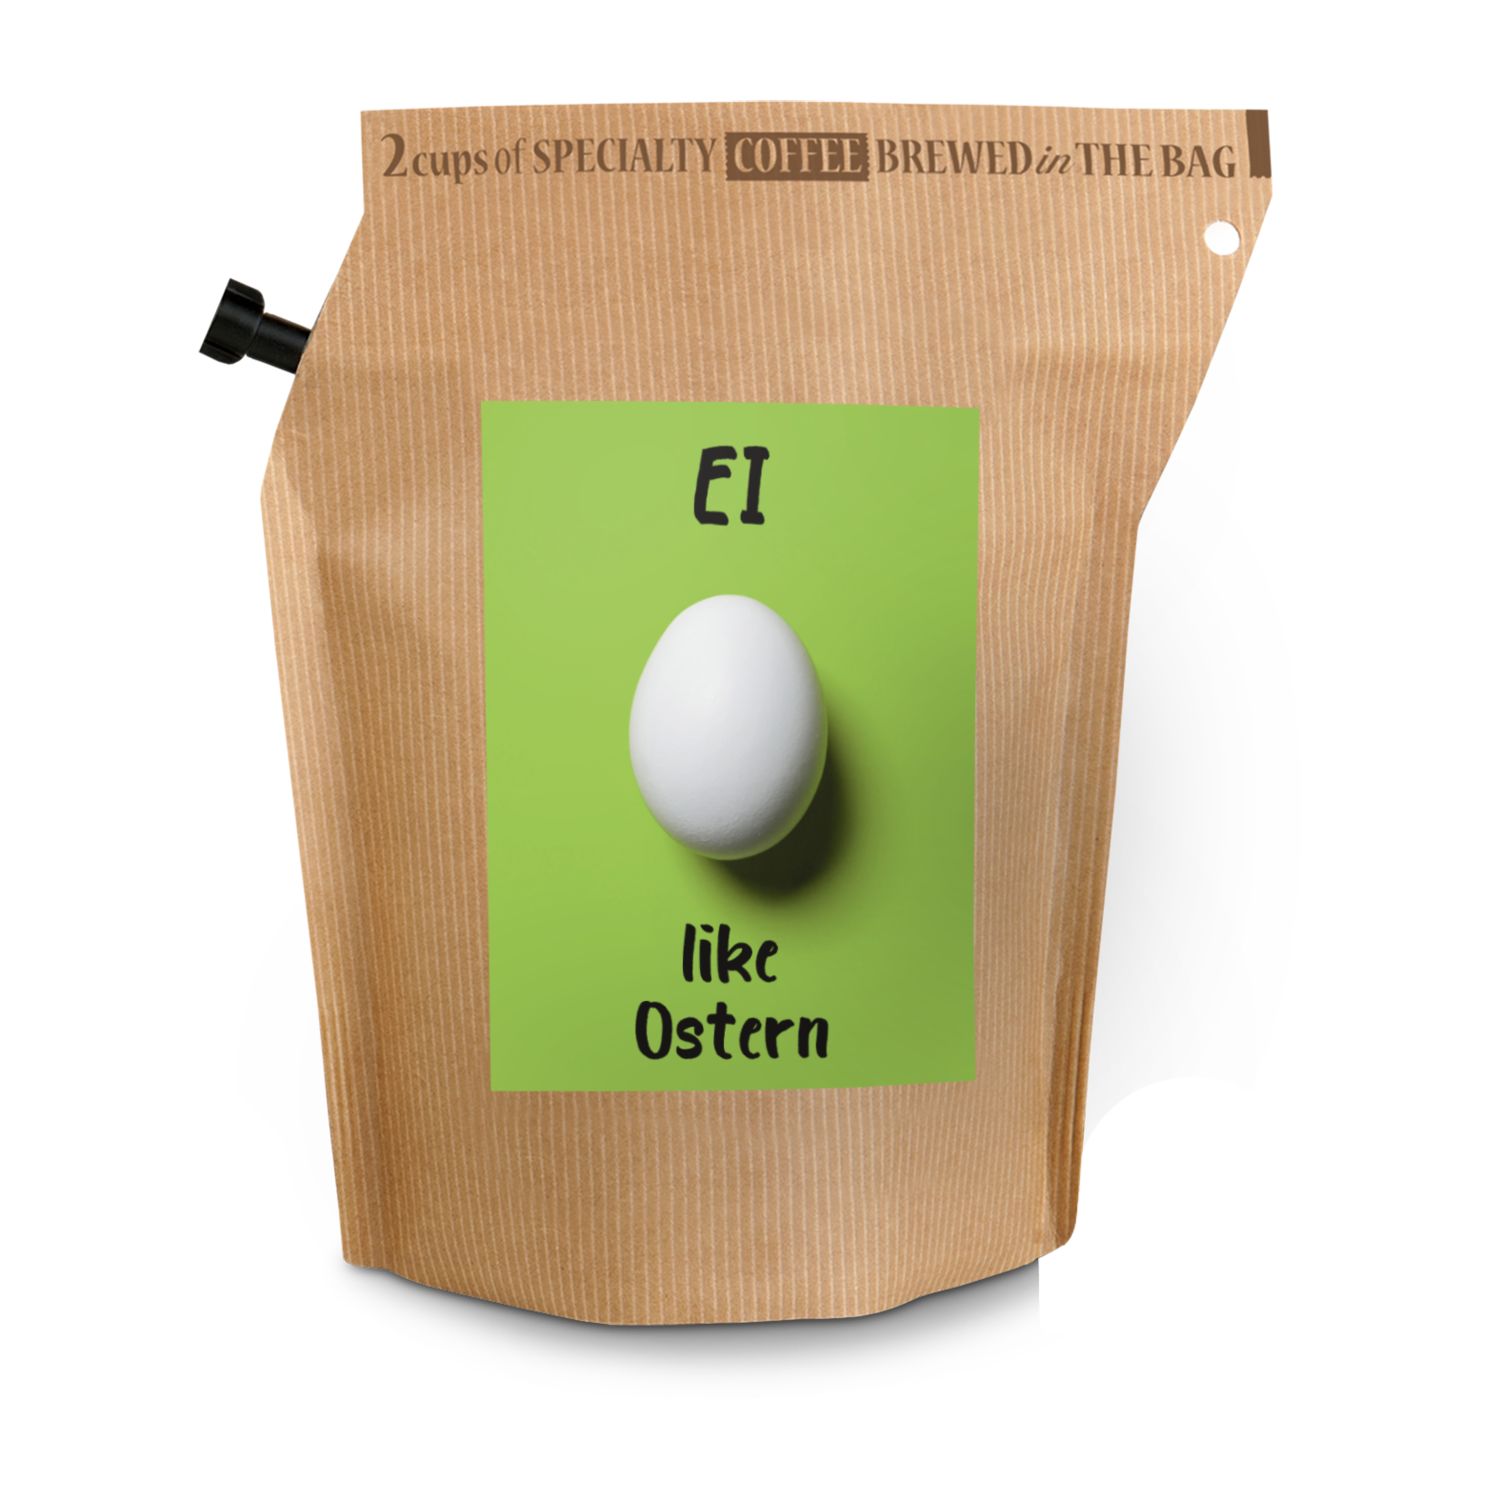 Geschenkartikel / Präsentartikel: Oster-Kaffee - Ei like Ostern 2K1624f